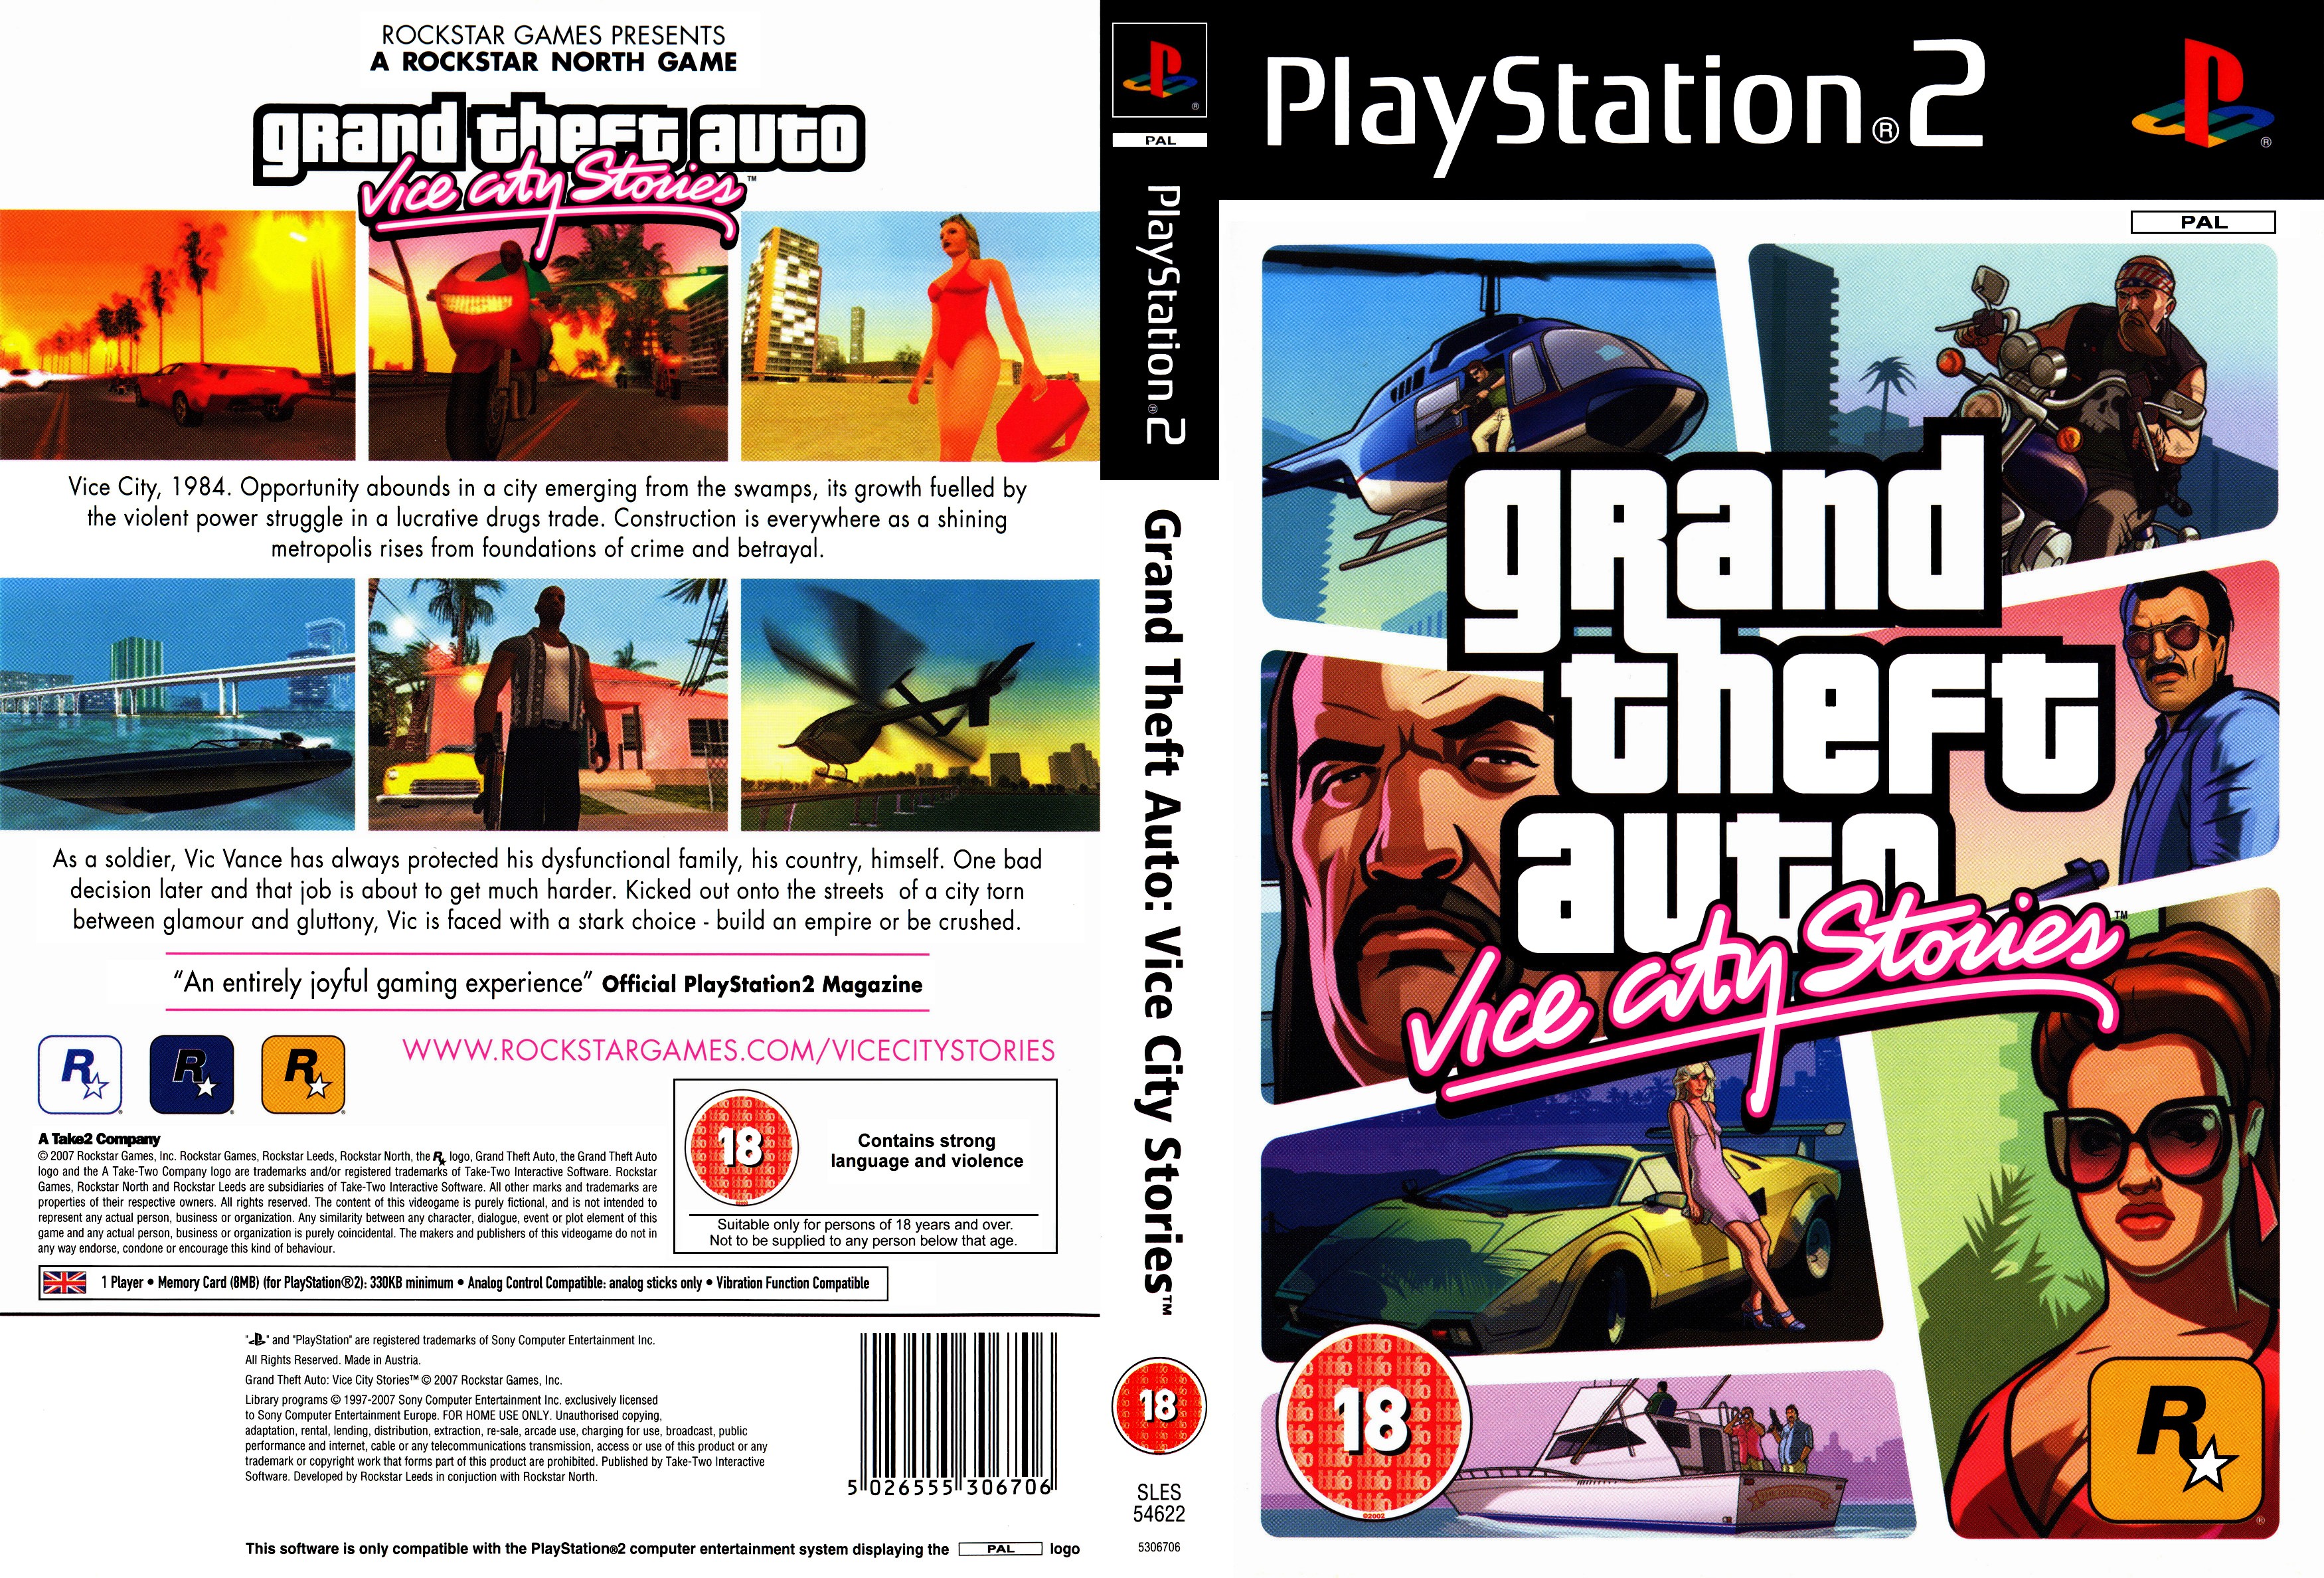 Grand Theft Auto Vice City Stories para PS2 - Seminovo